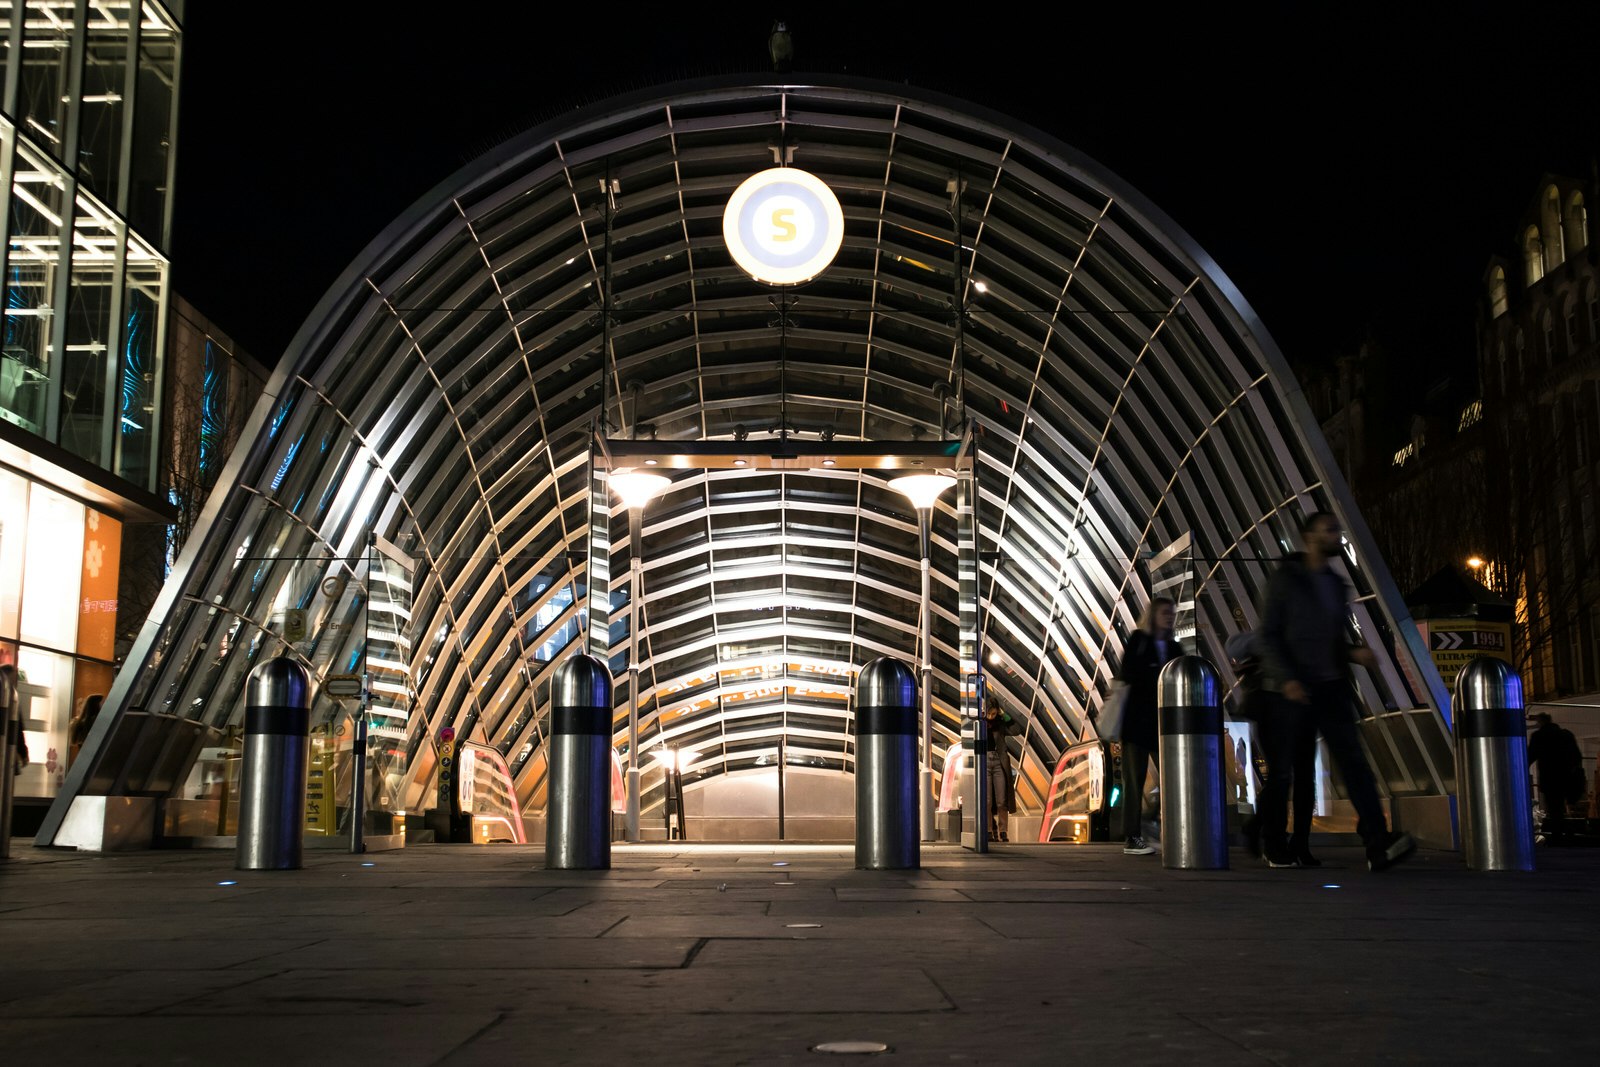 Exterior night shot of the illuminated entrance to St Enoch Subway station on Argyll Street, Glasgow